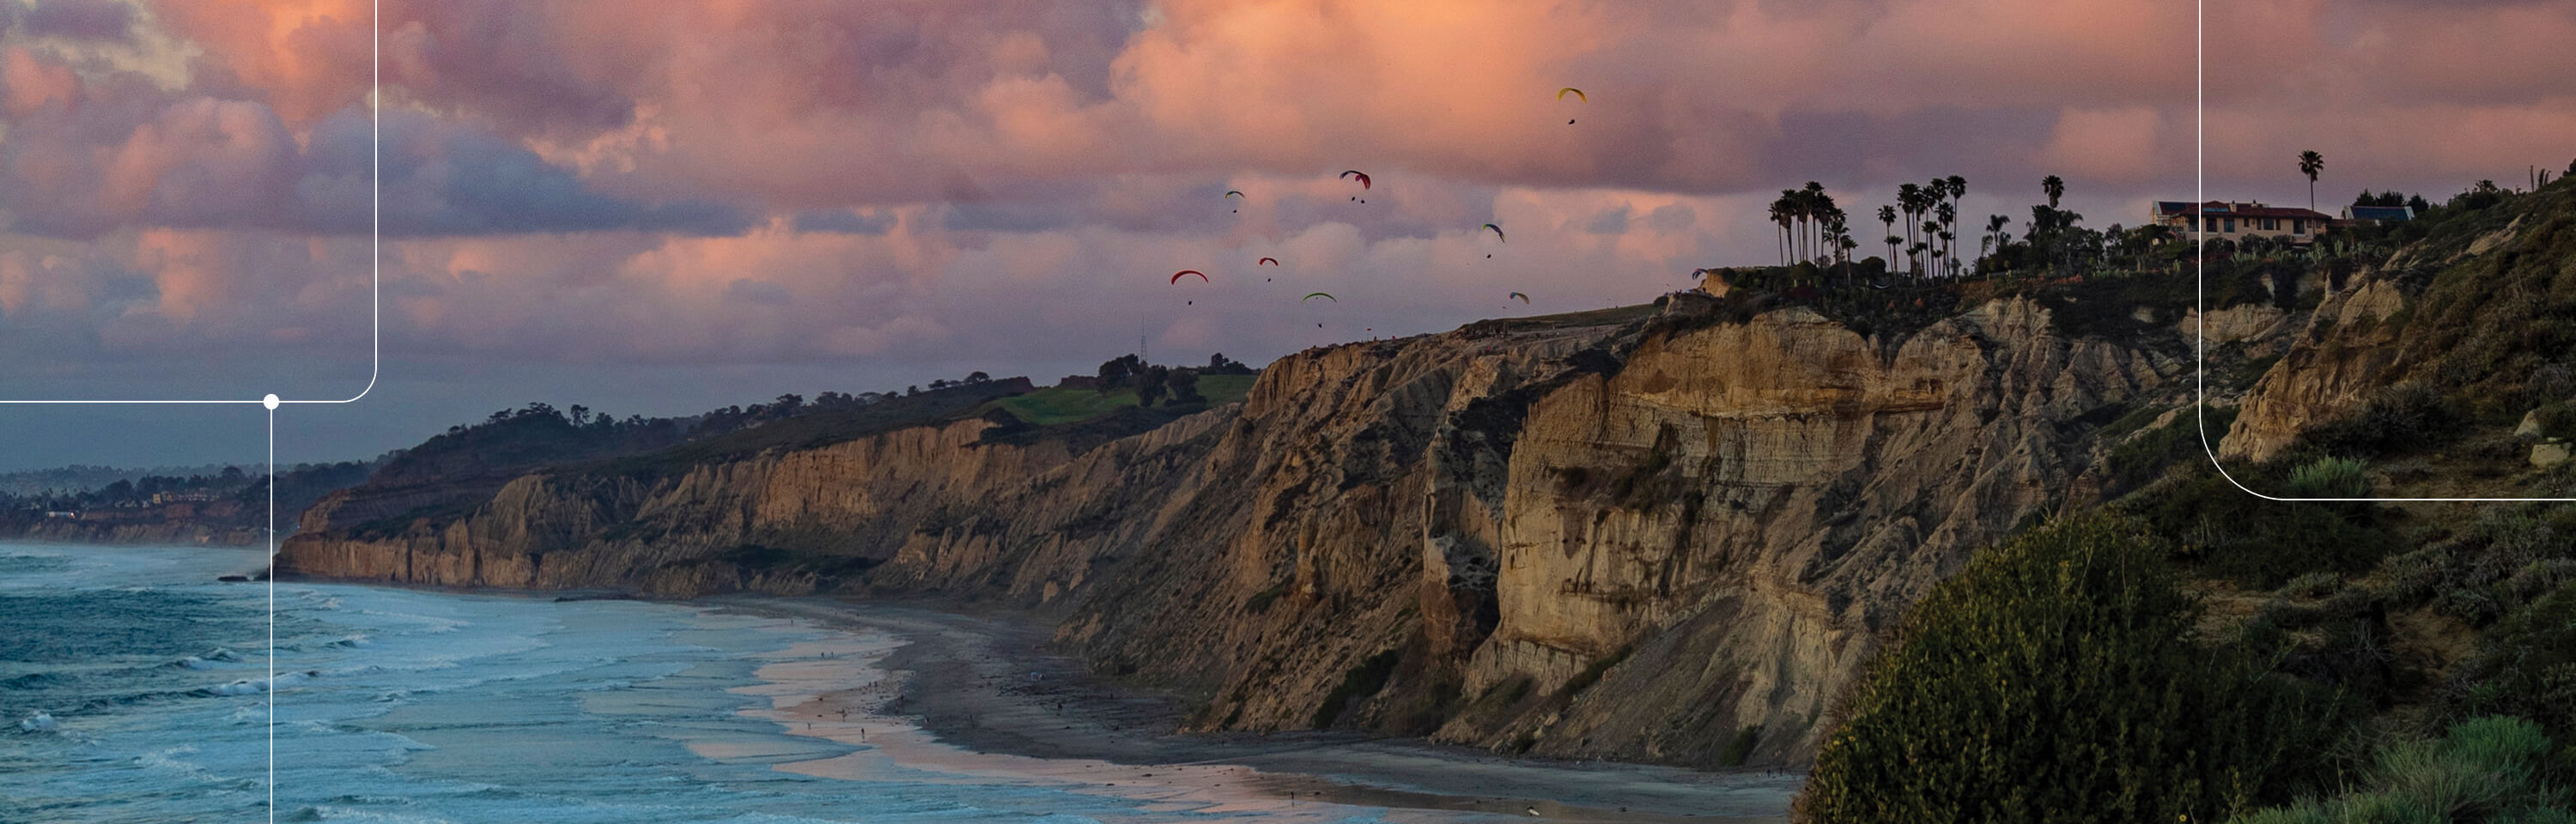 La Jolla cliffs near Black's Beach at dusk with hang gliders in flight